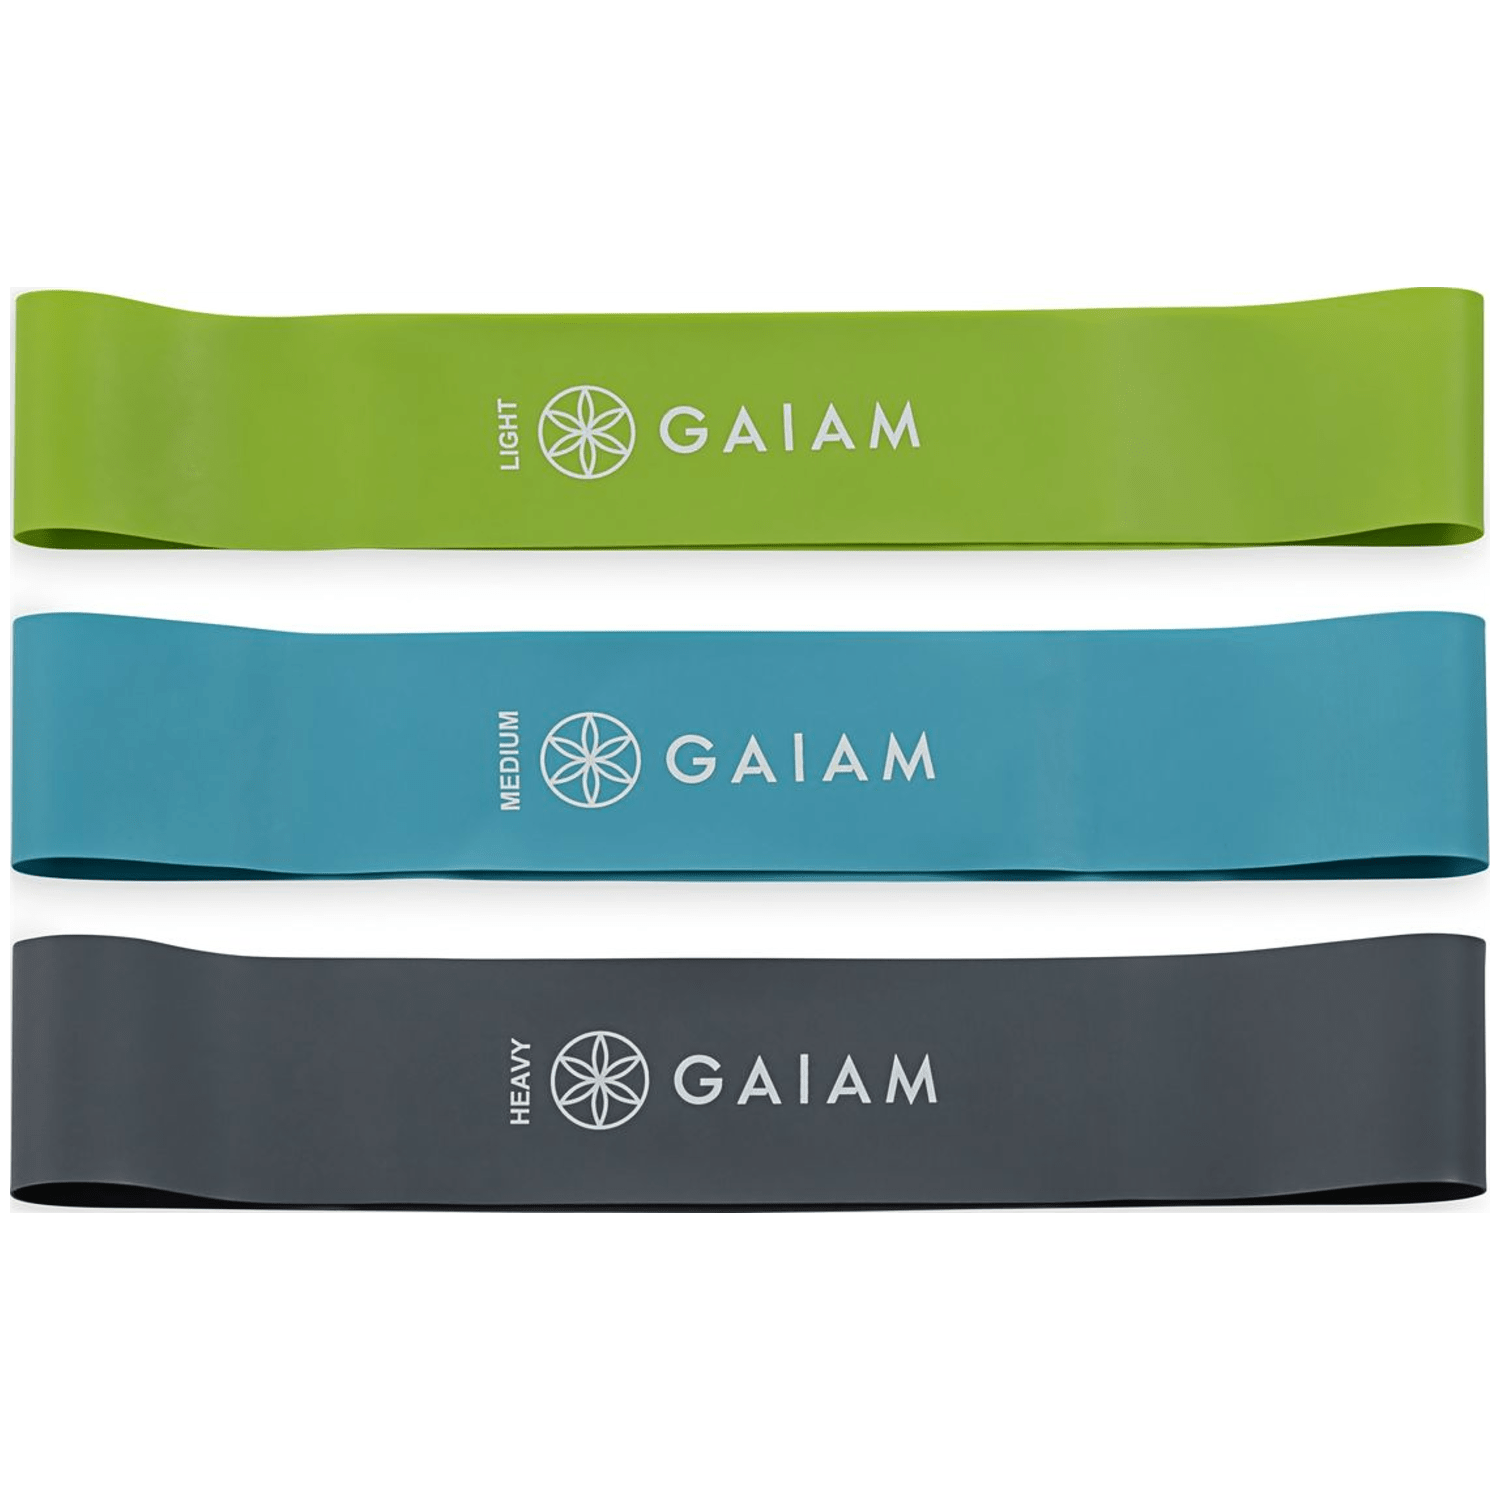 Gaiam Pack Physio-Band